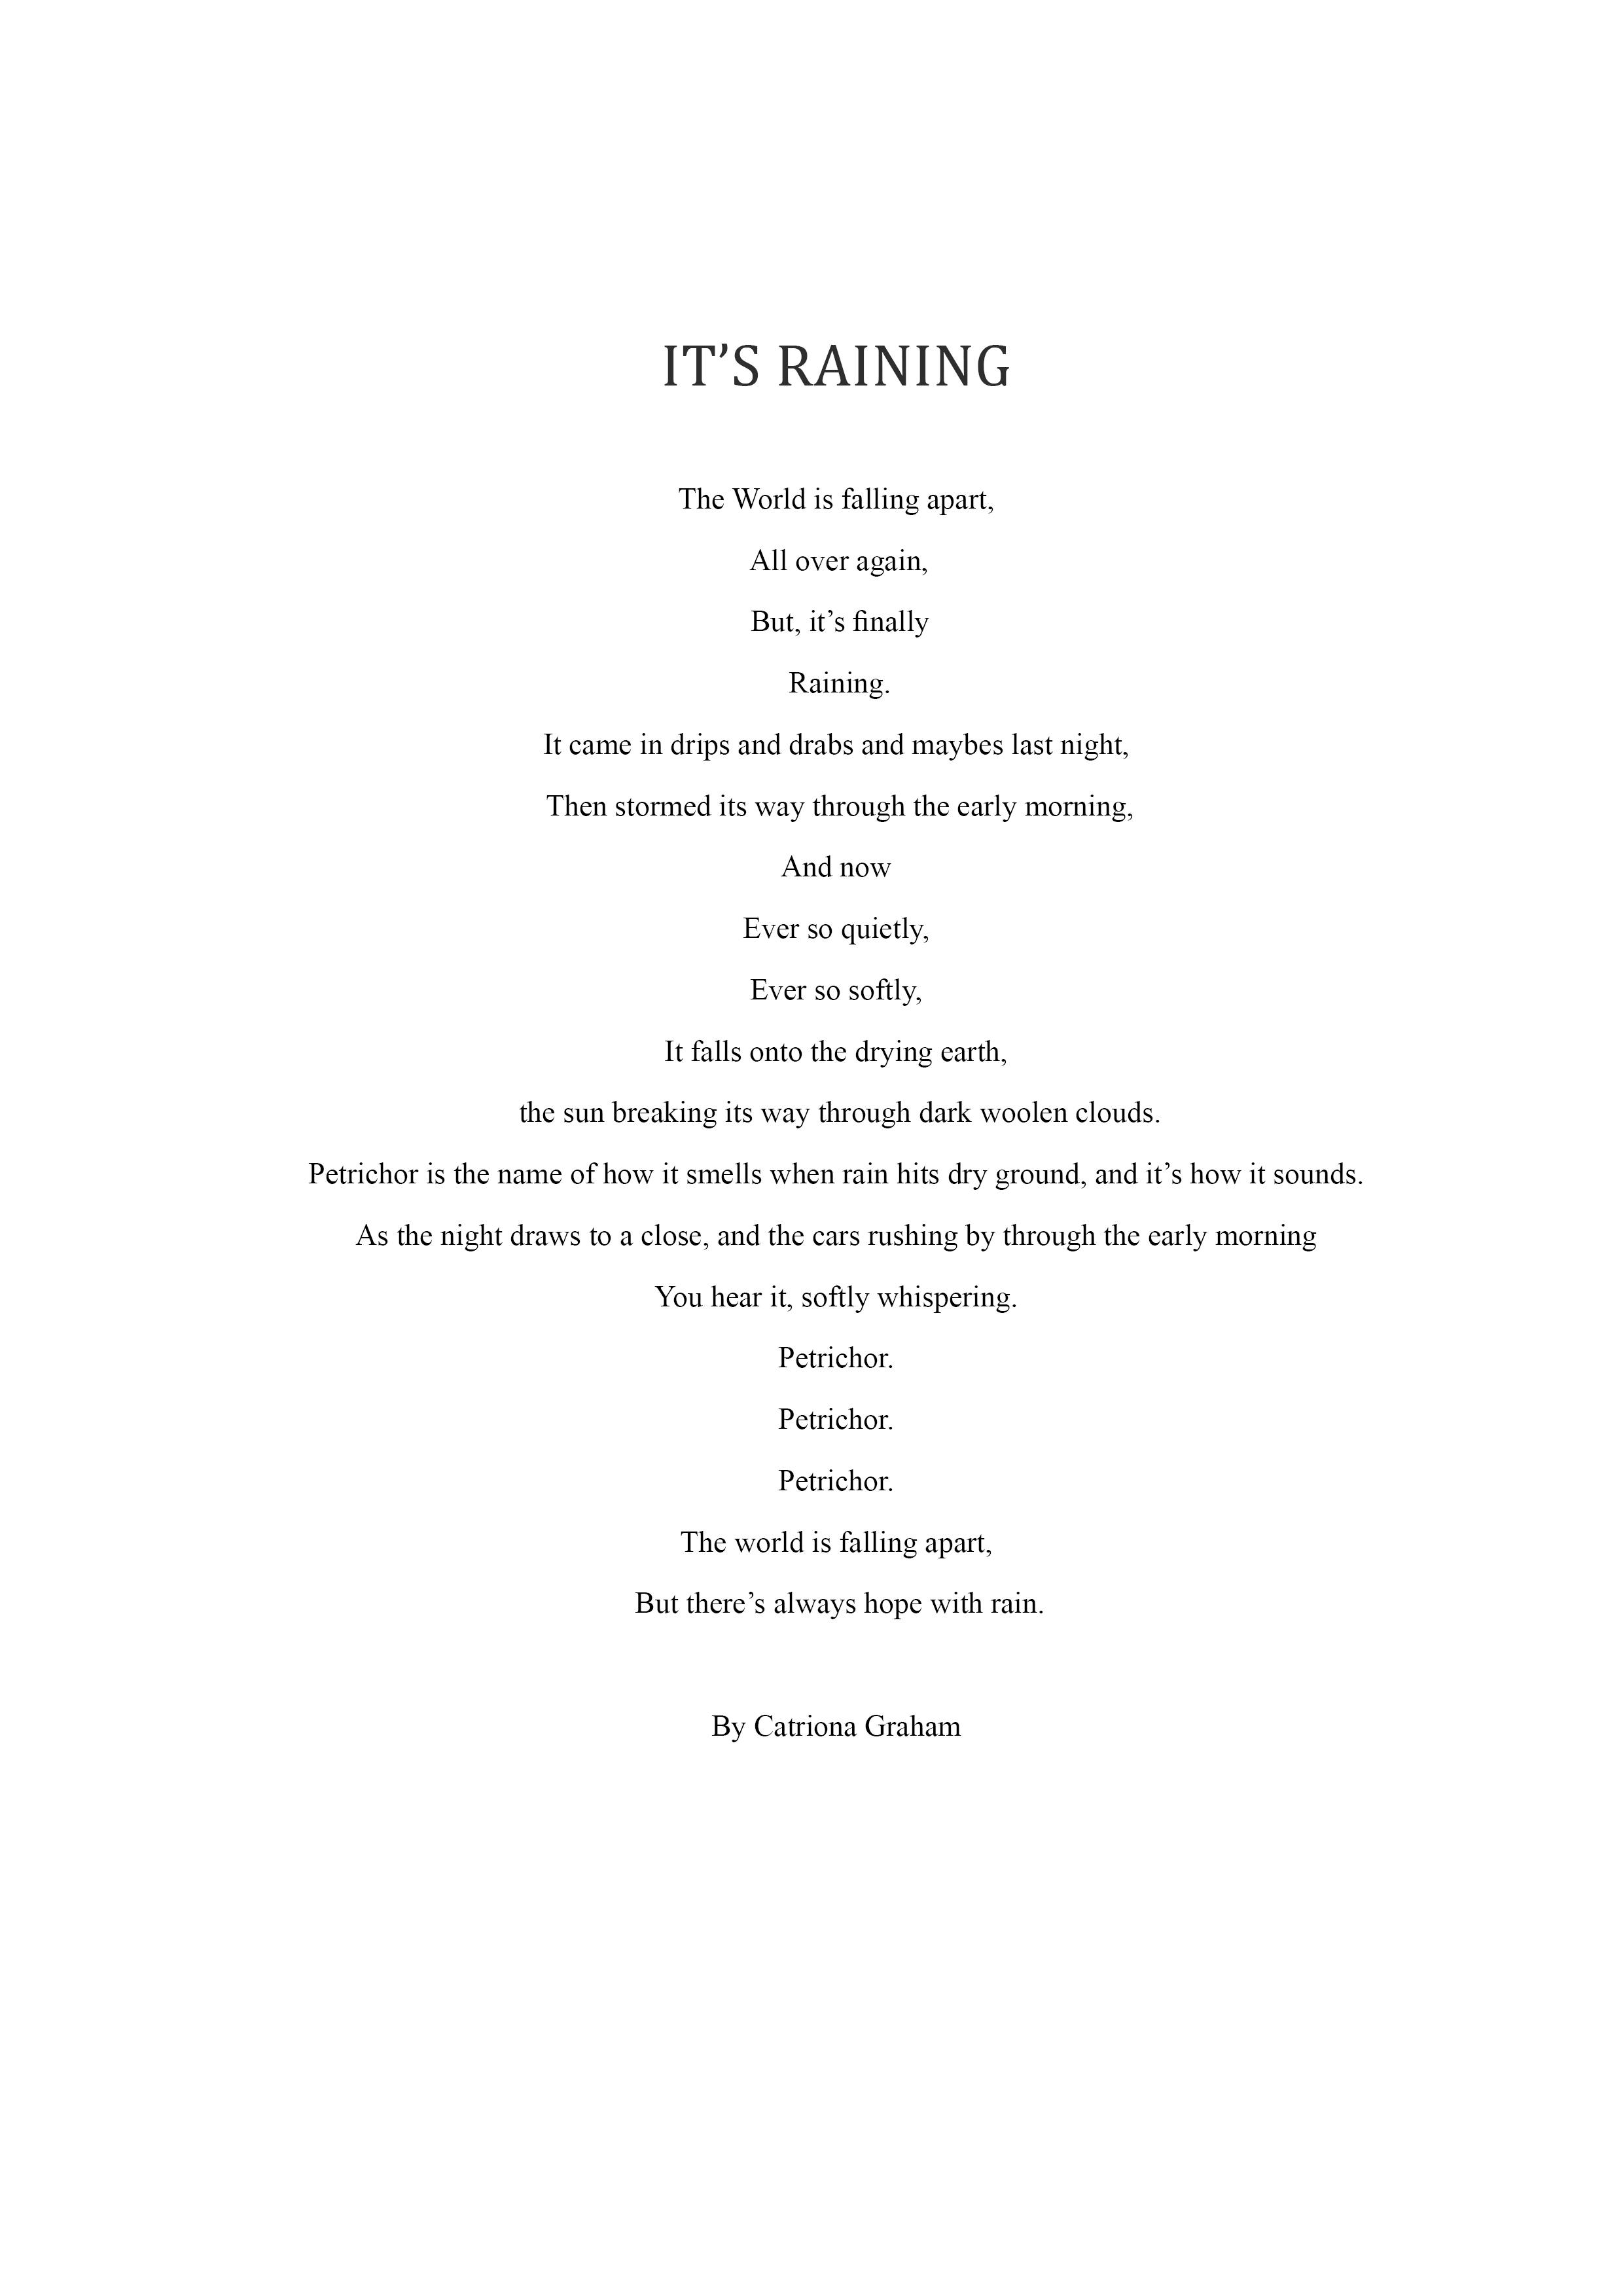 It's_Raining_by Catriona Graham.jpg